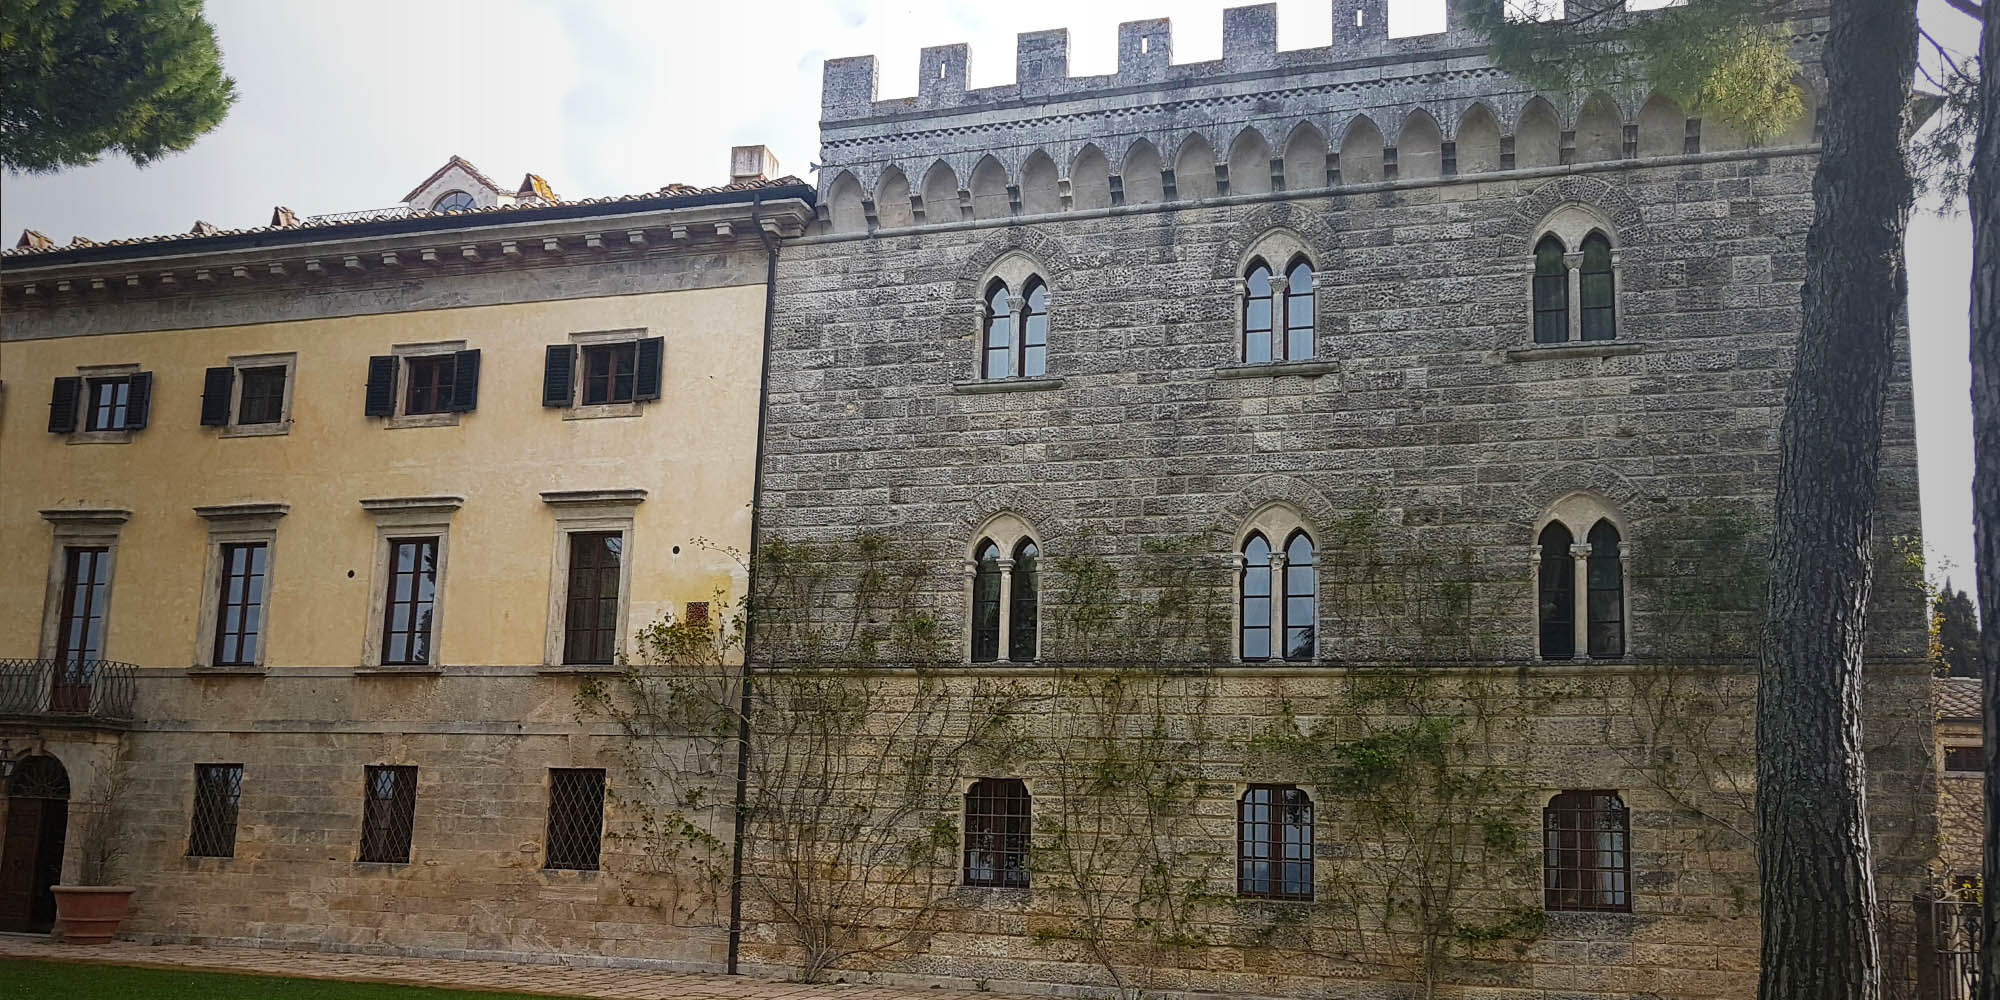 Borgo Pignano, Volterra (PI)